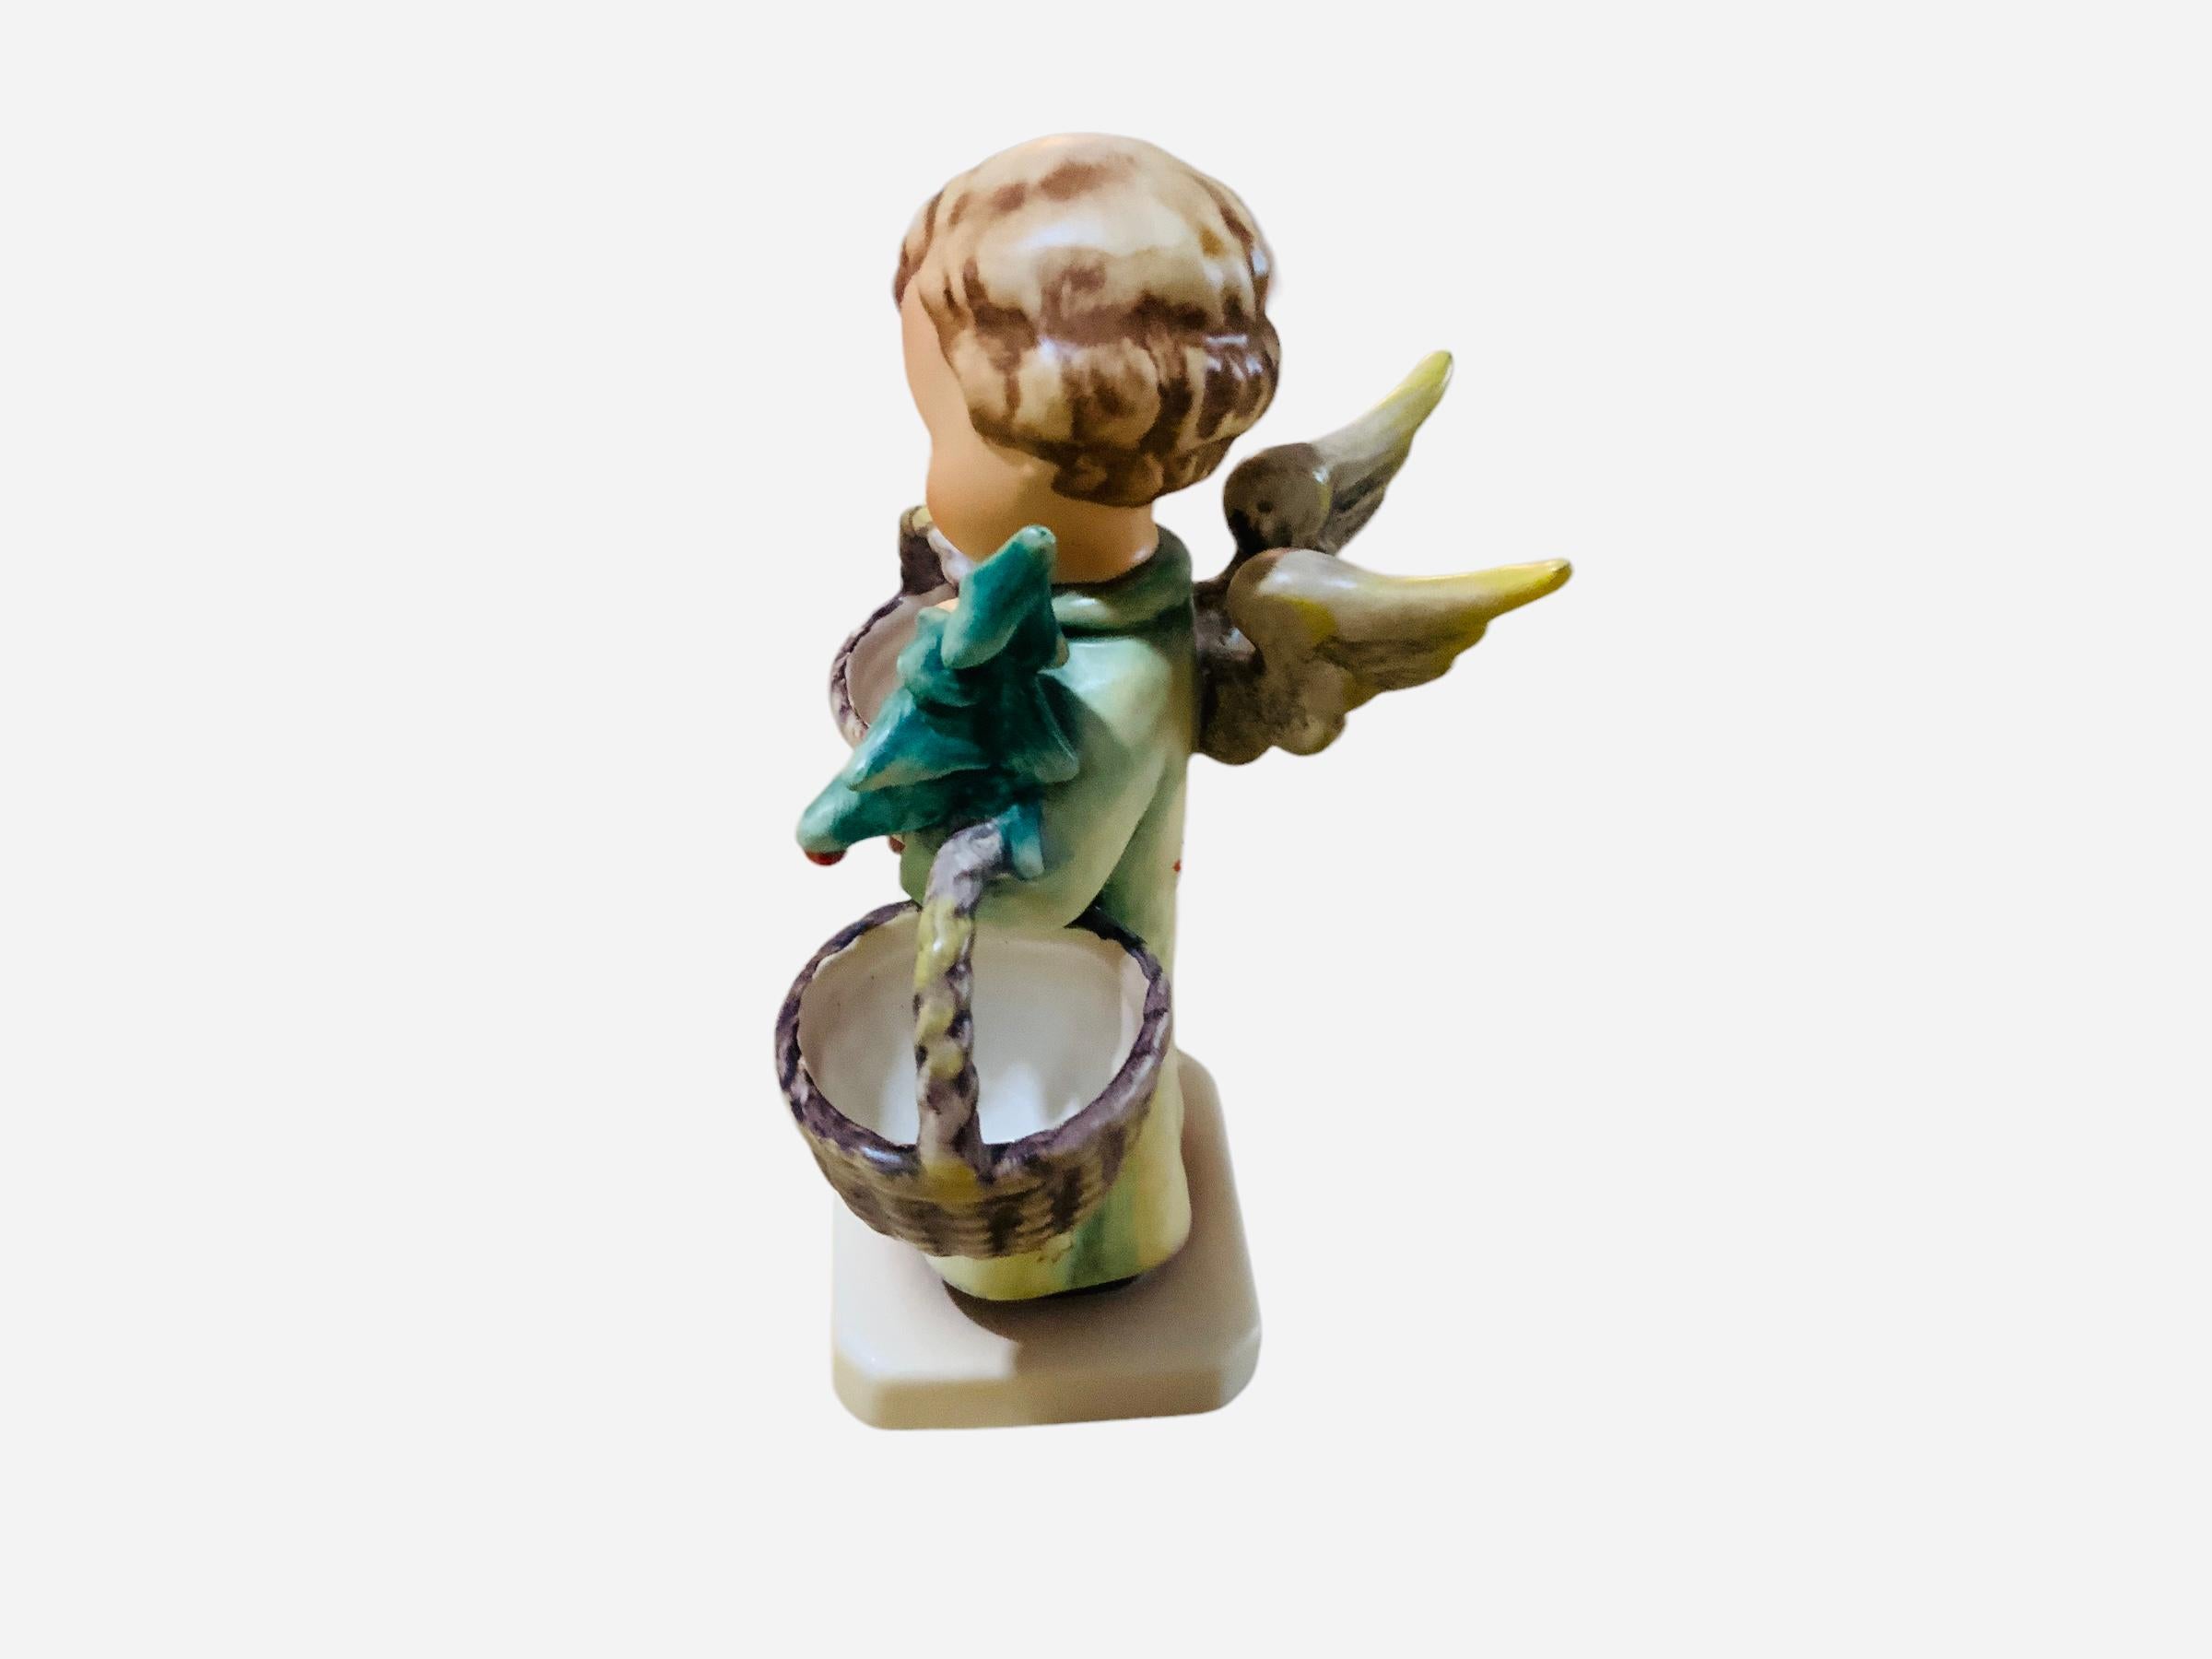 Hand-Crafted Goebel Company Hummel Porcelain Figurine “Christmas Angel”